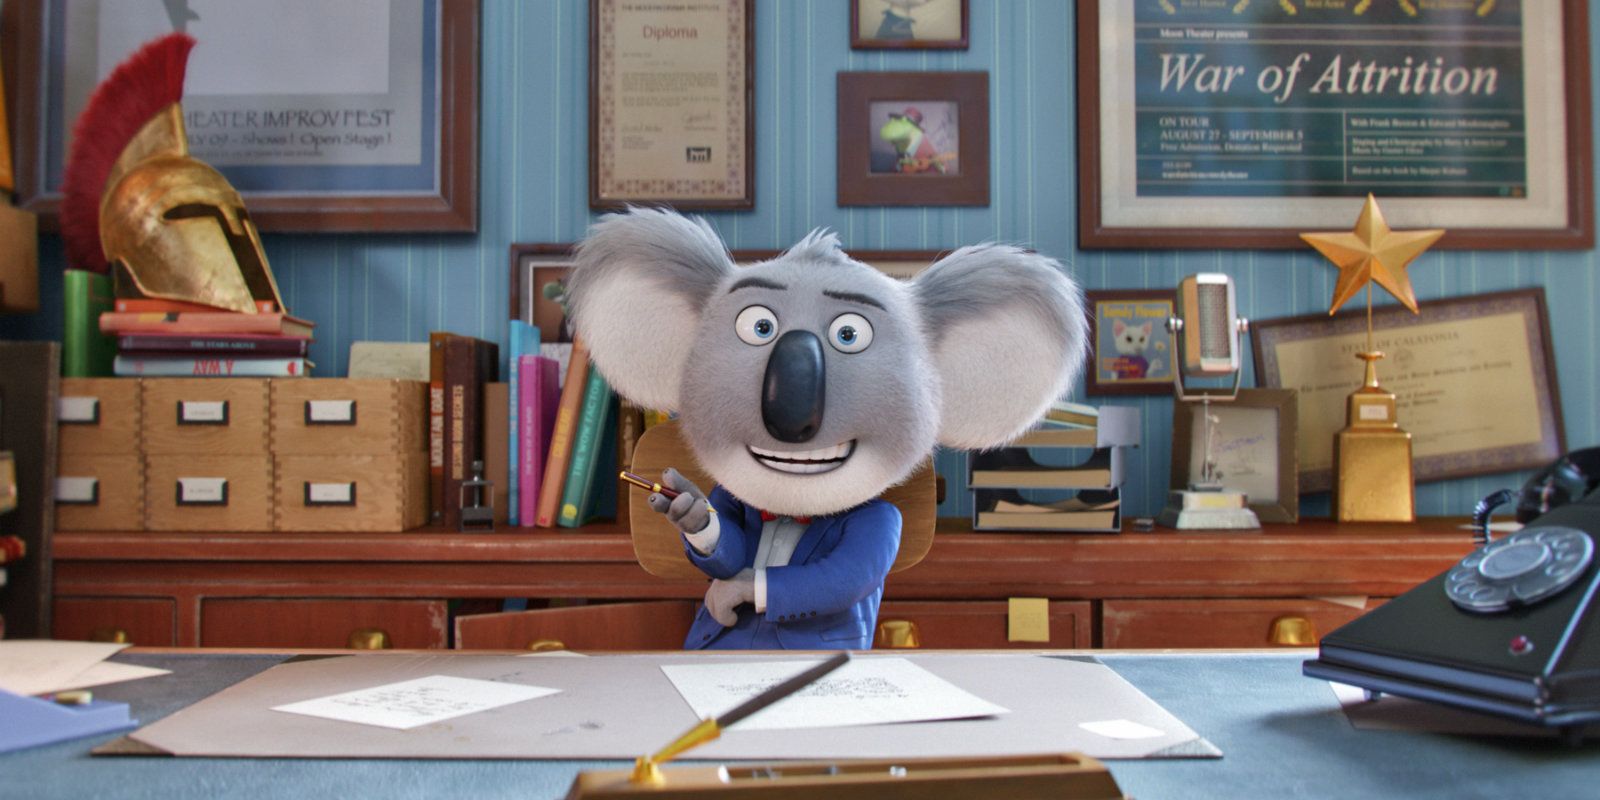 Buster Moon, the koala,sits behind his desk